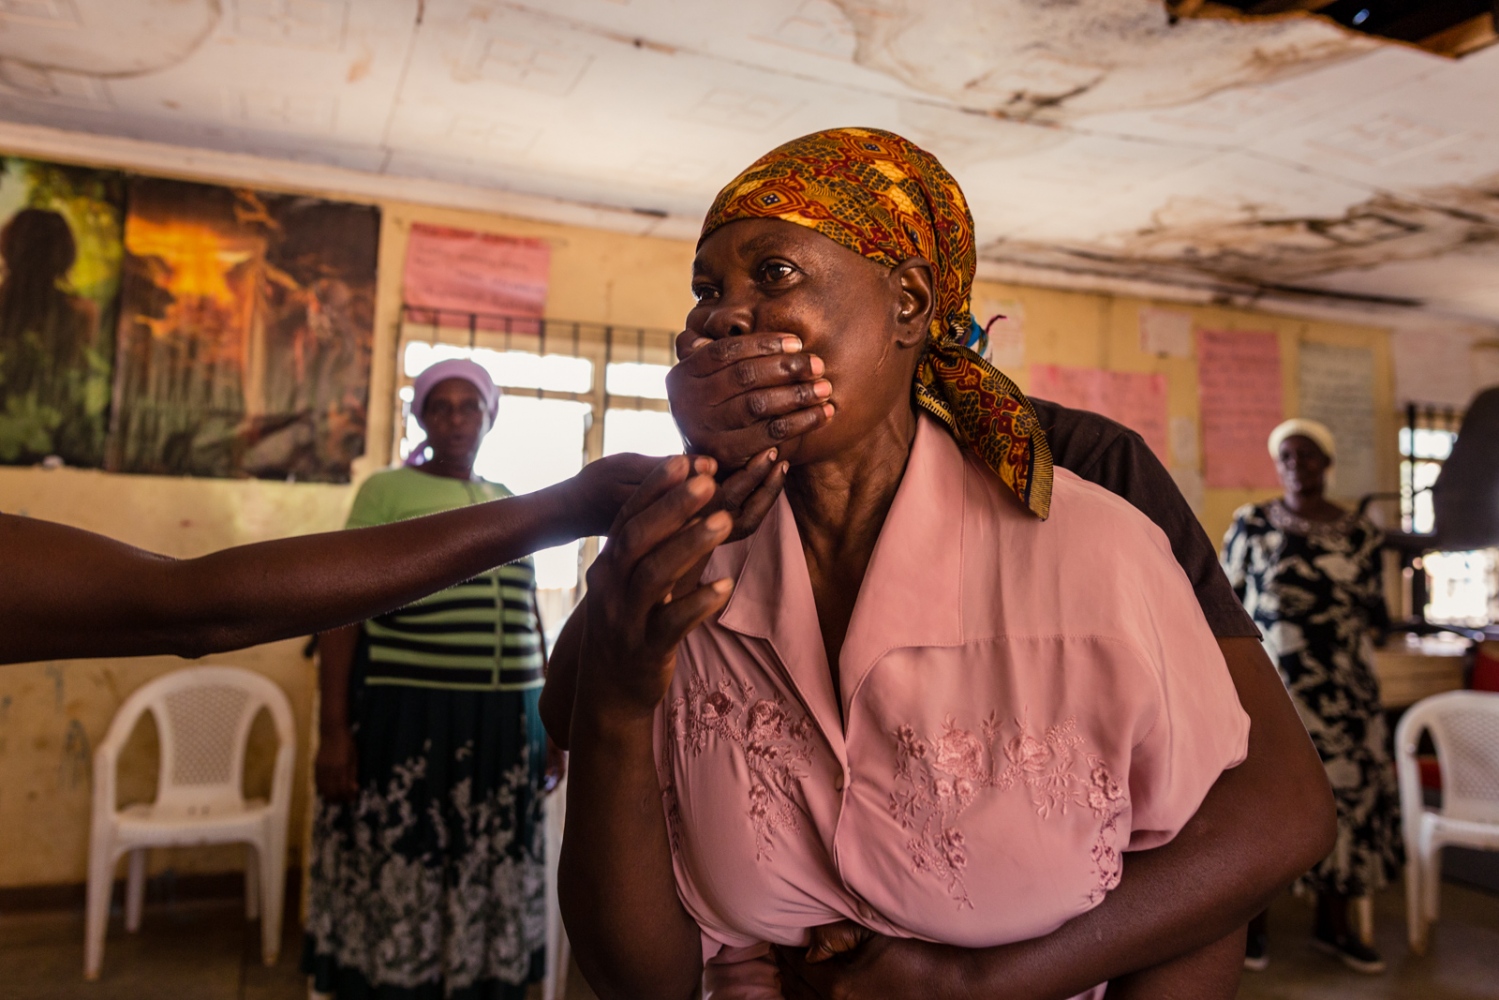 SHOSHO JIKINGE - Grandmothers in Nairobi's slums fight off rapists